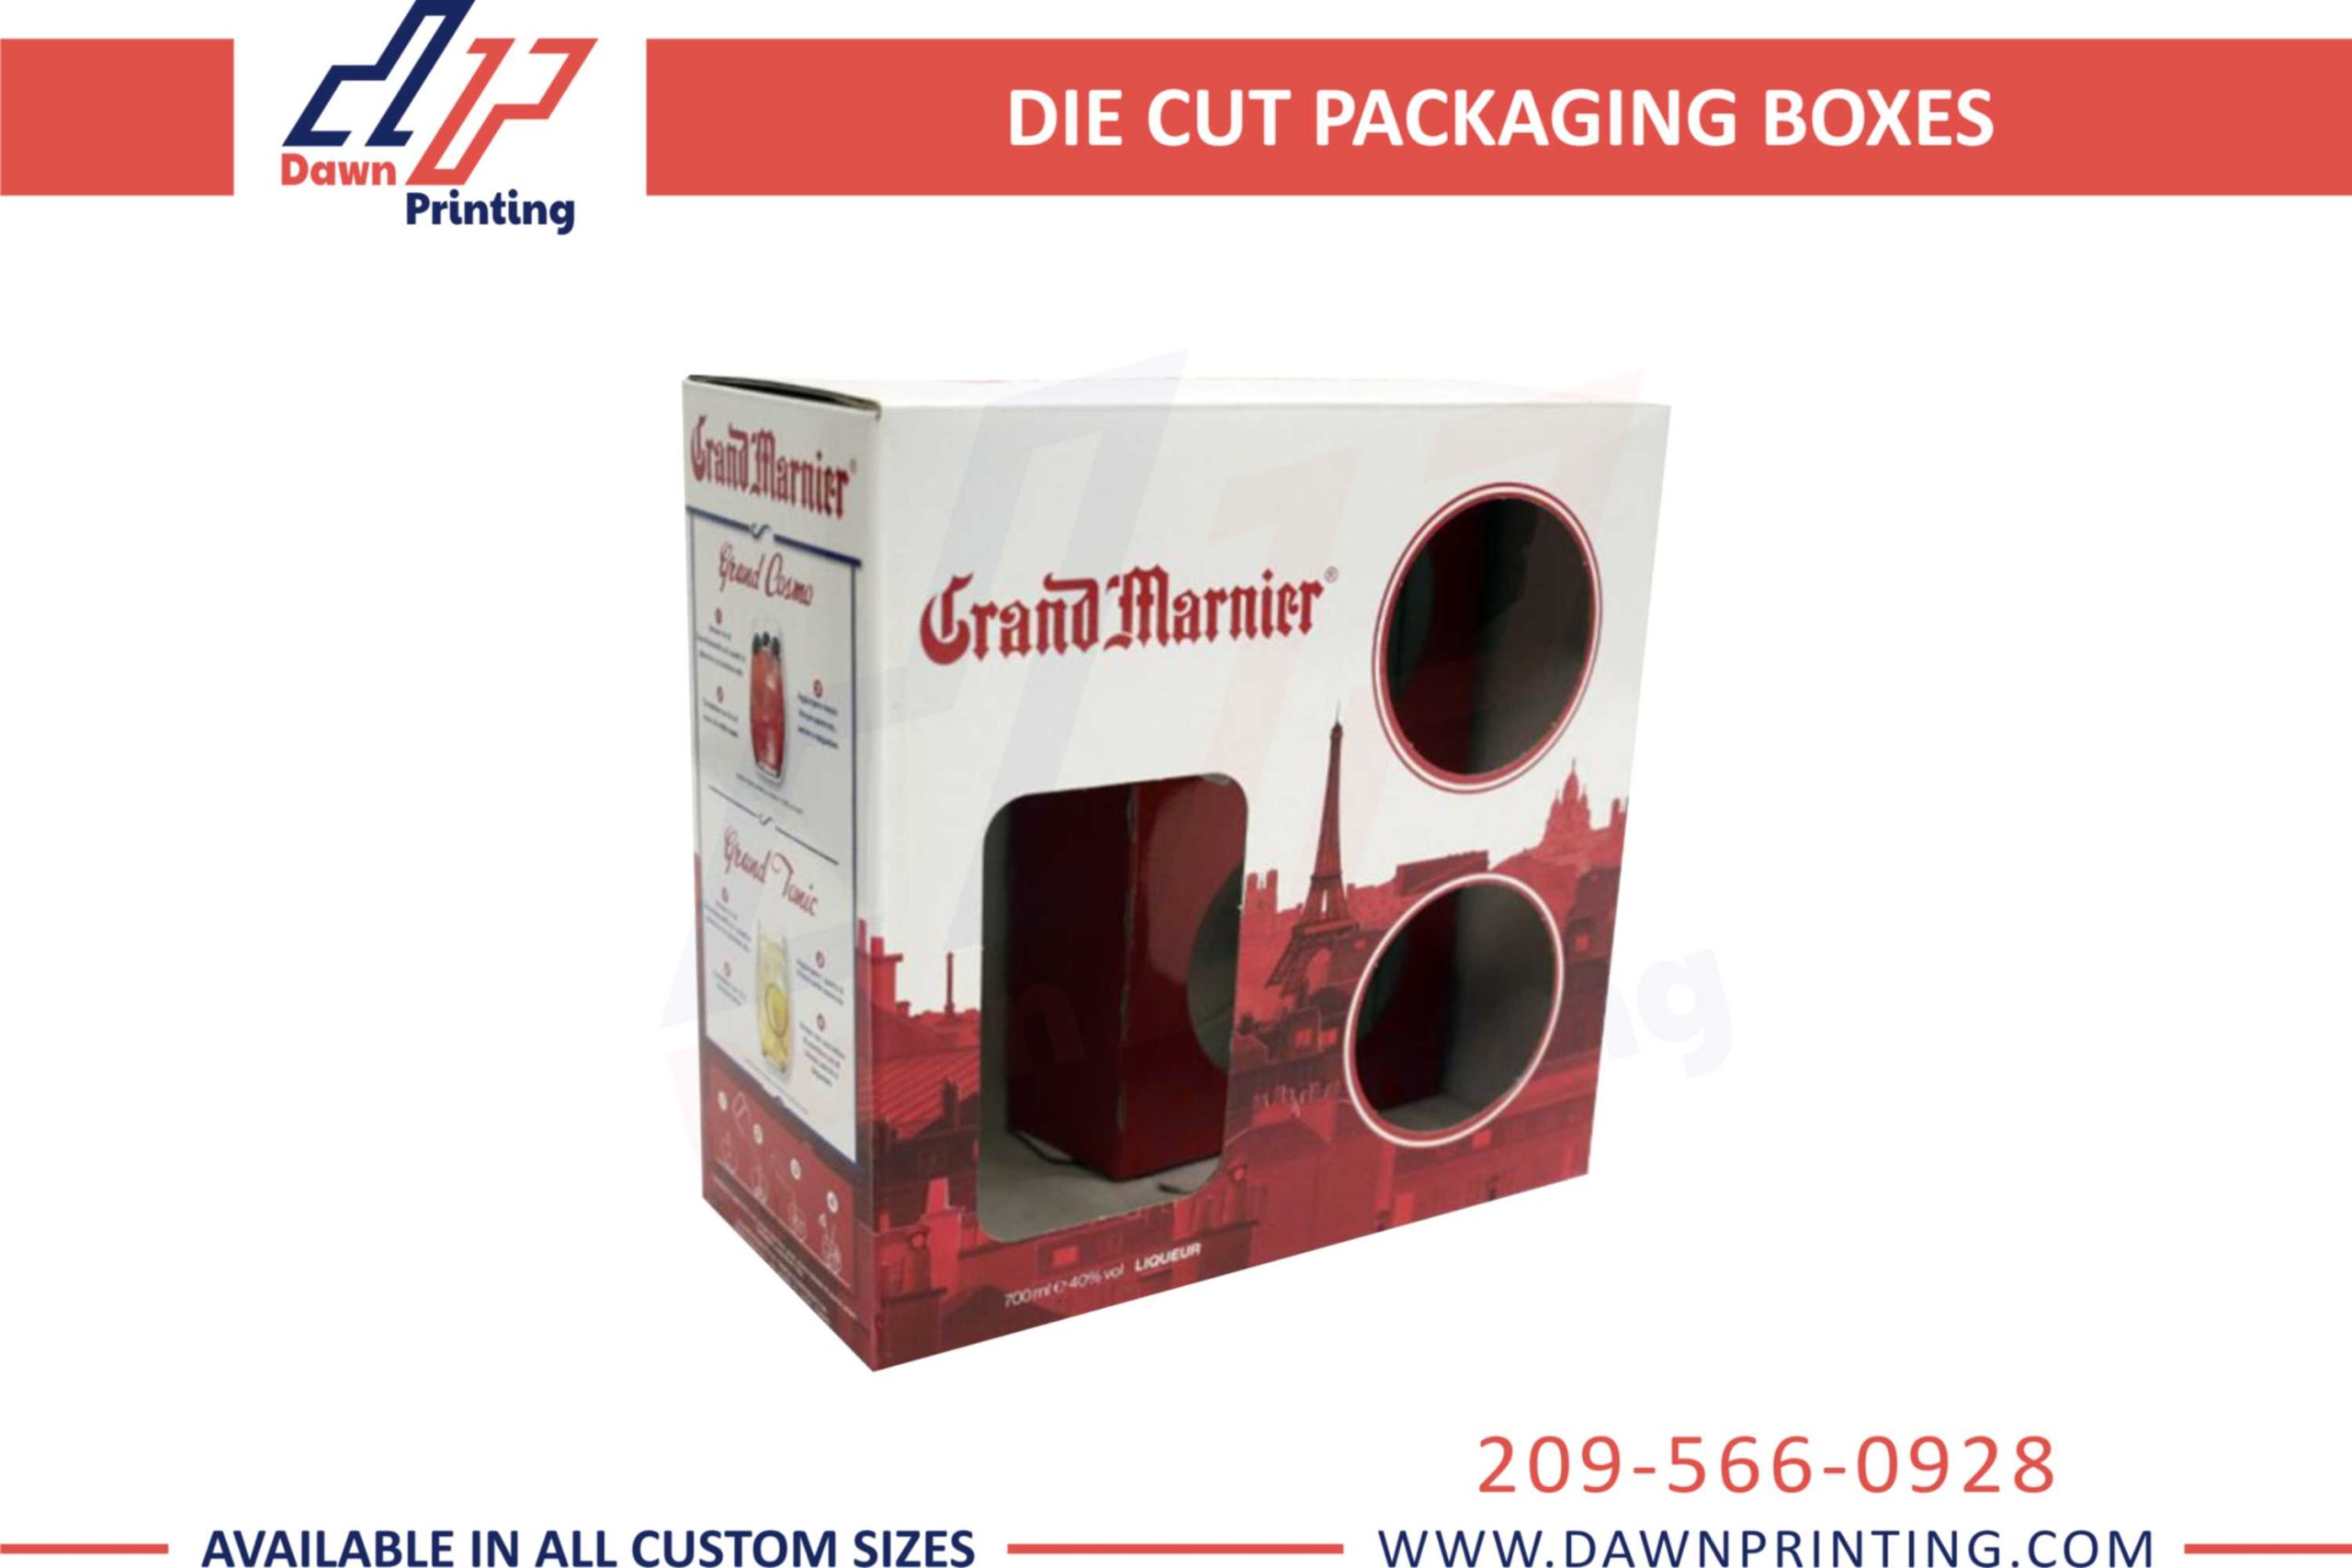 Wholesale Boxes With Die Cut - Dawn Printing